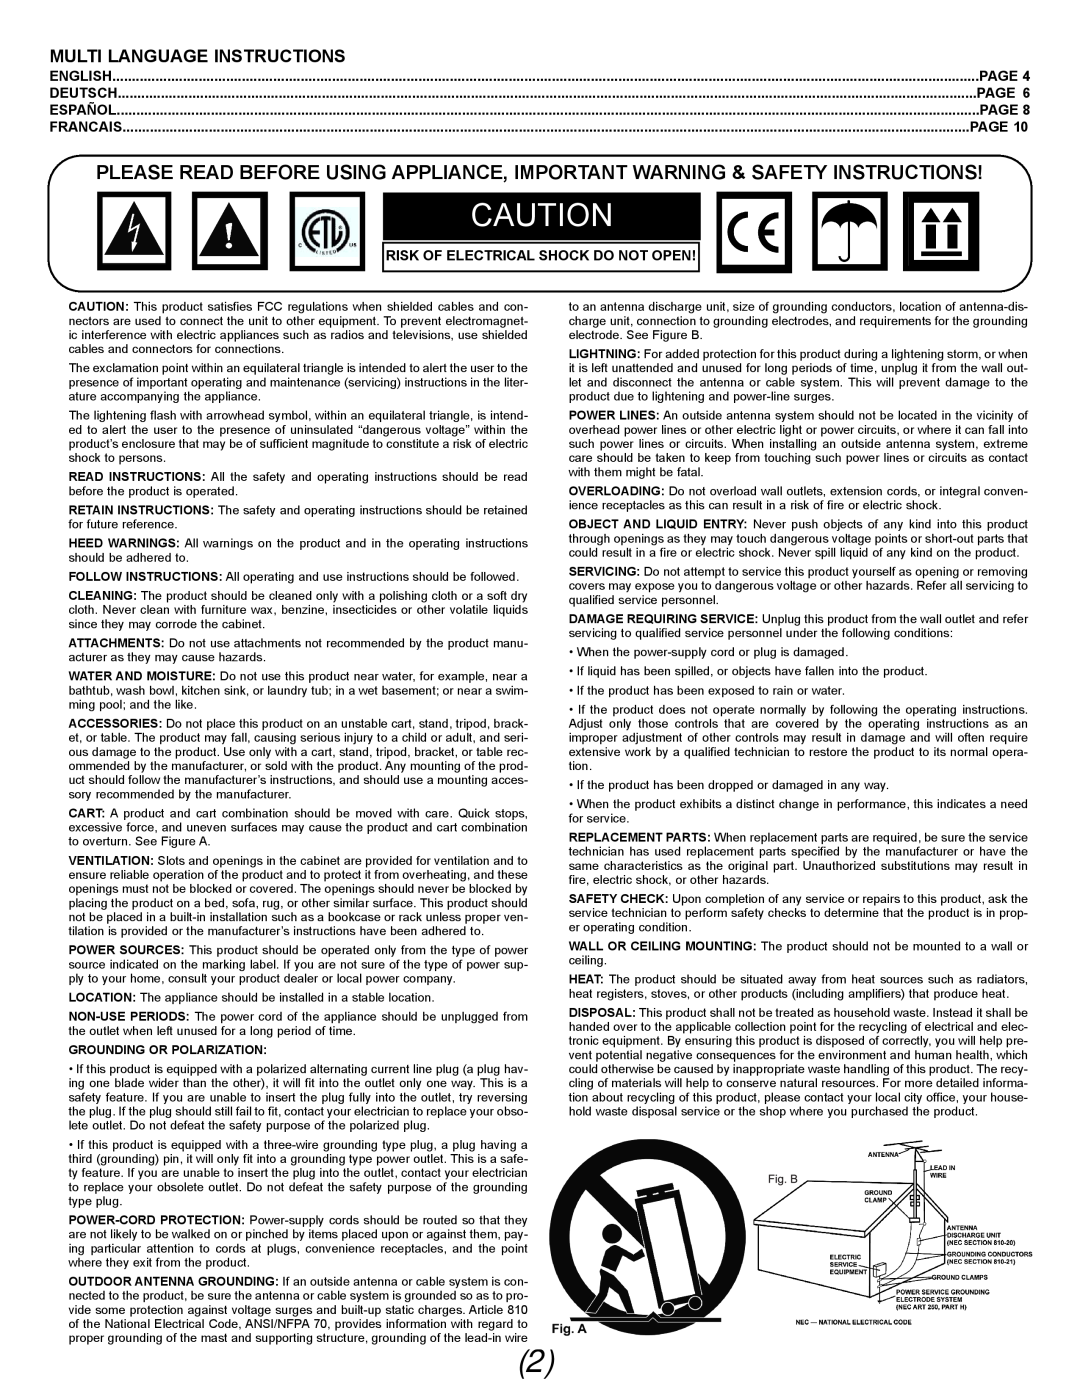 Gemini CDX-02G manual Multi Language Instructions, Francais, Grounding Or Polarization 